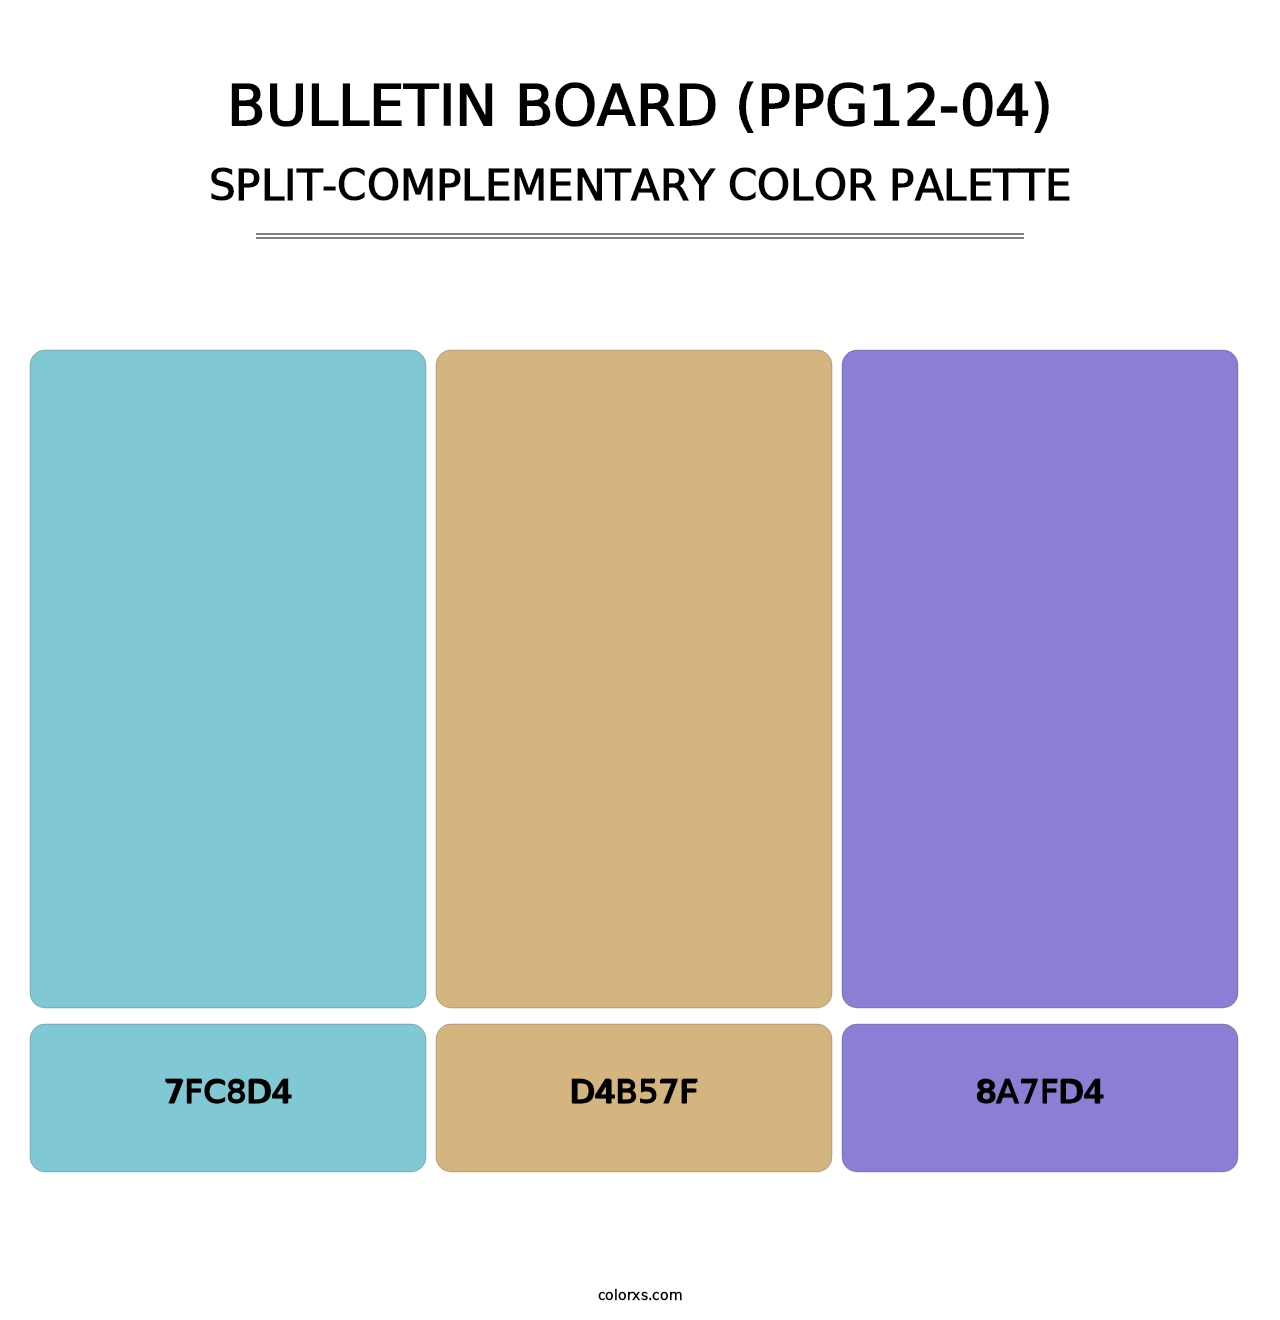 Bulletin Board (PPG12-04) - Split-Complementary Color Palette